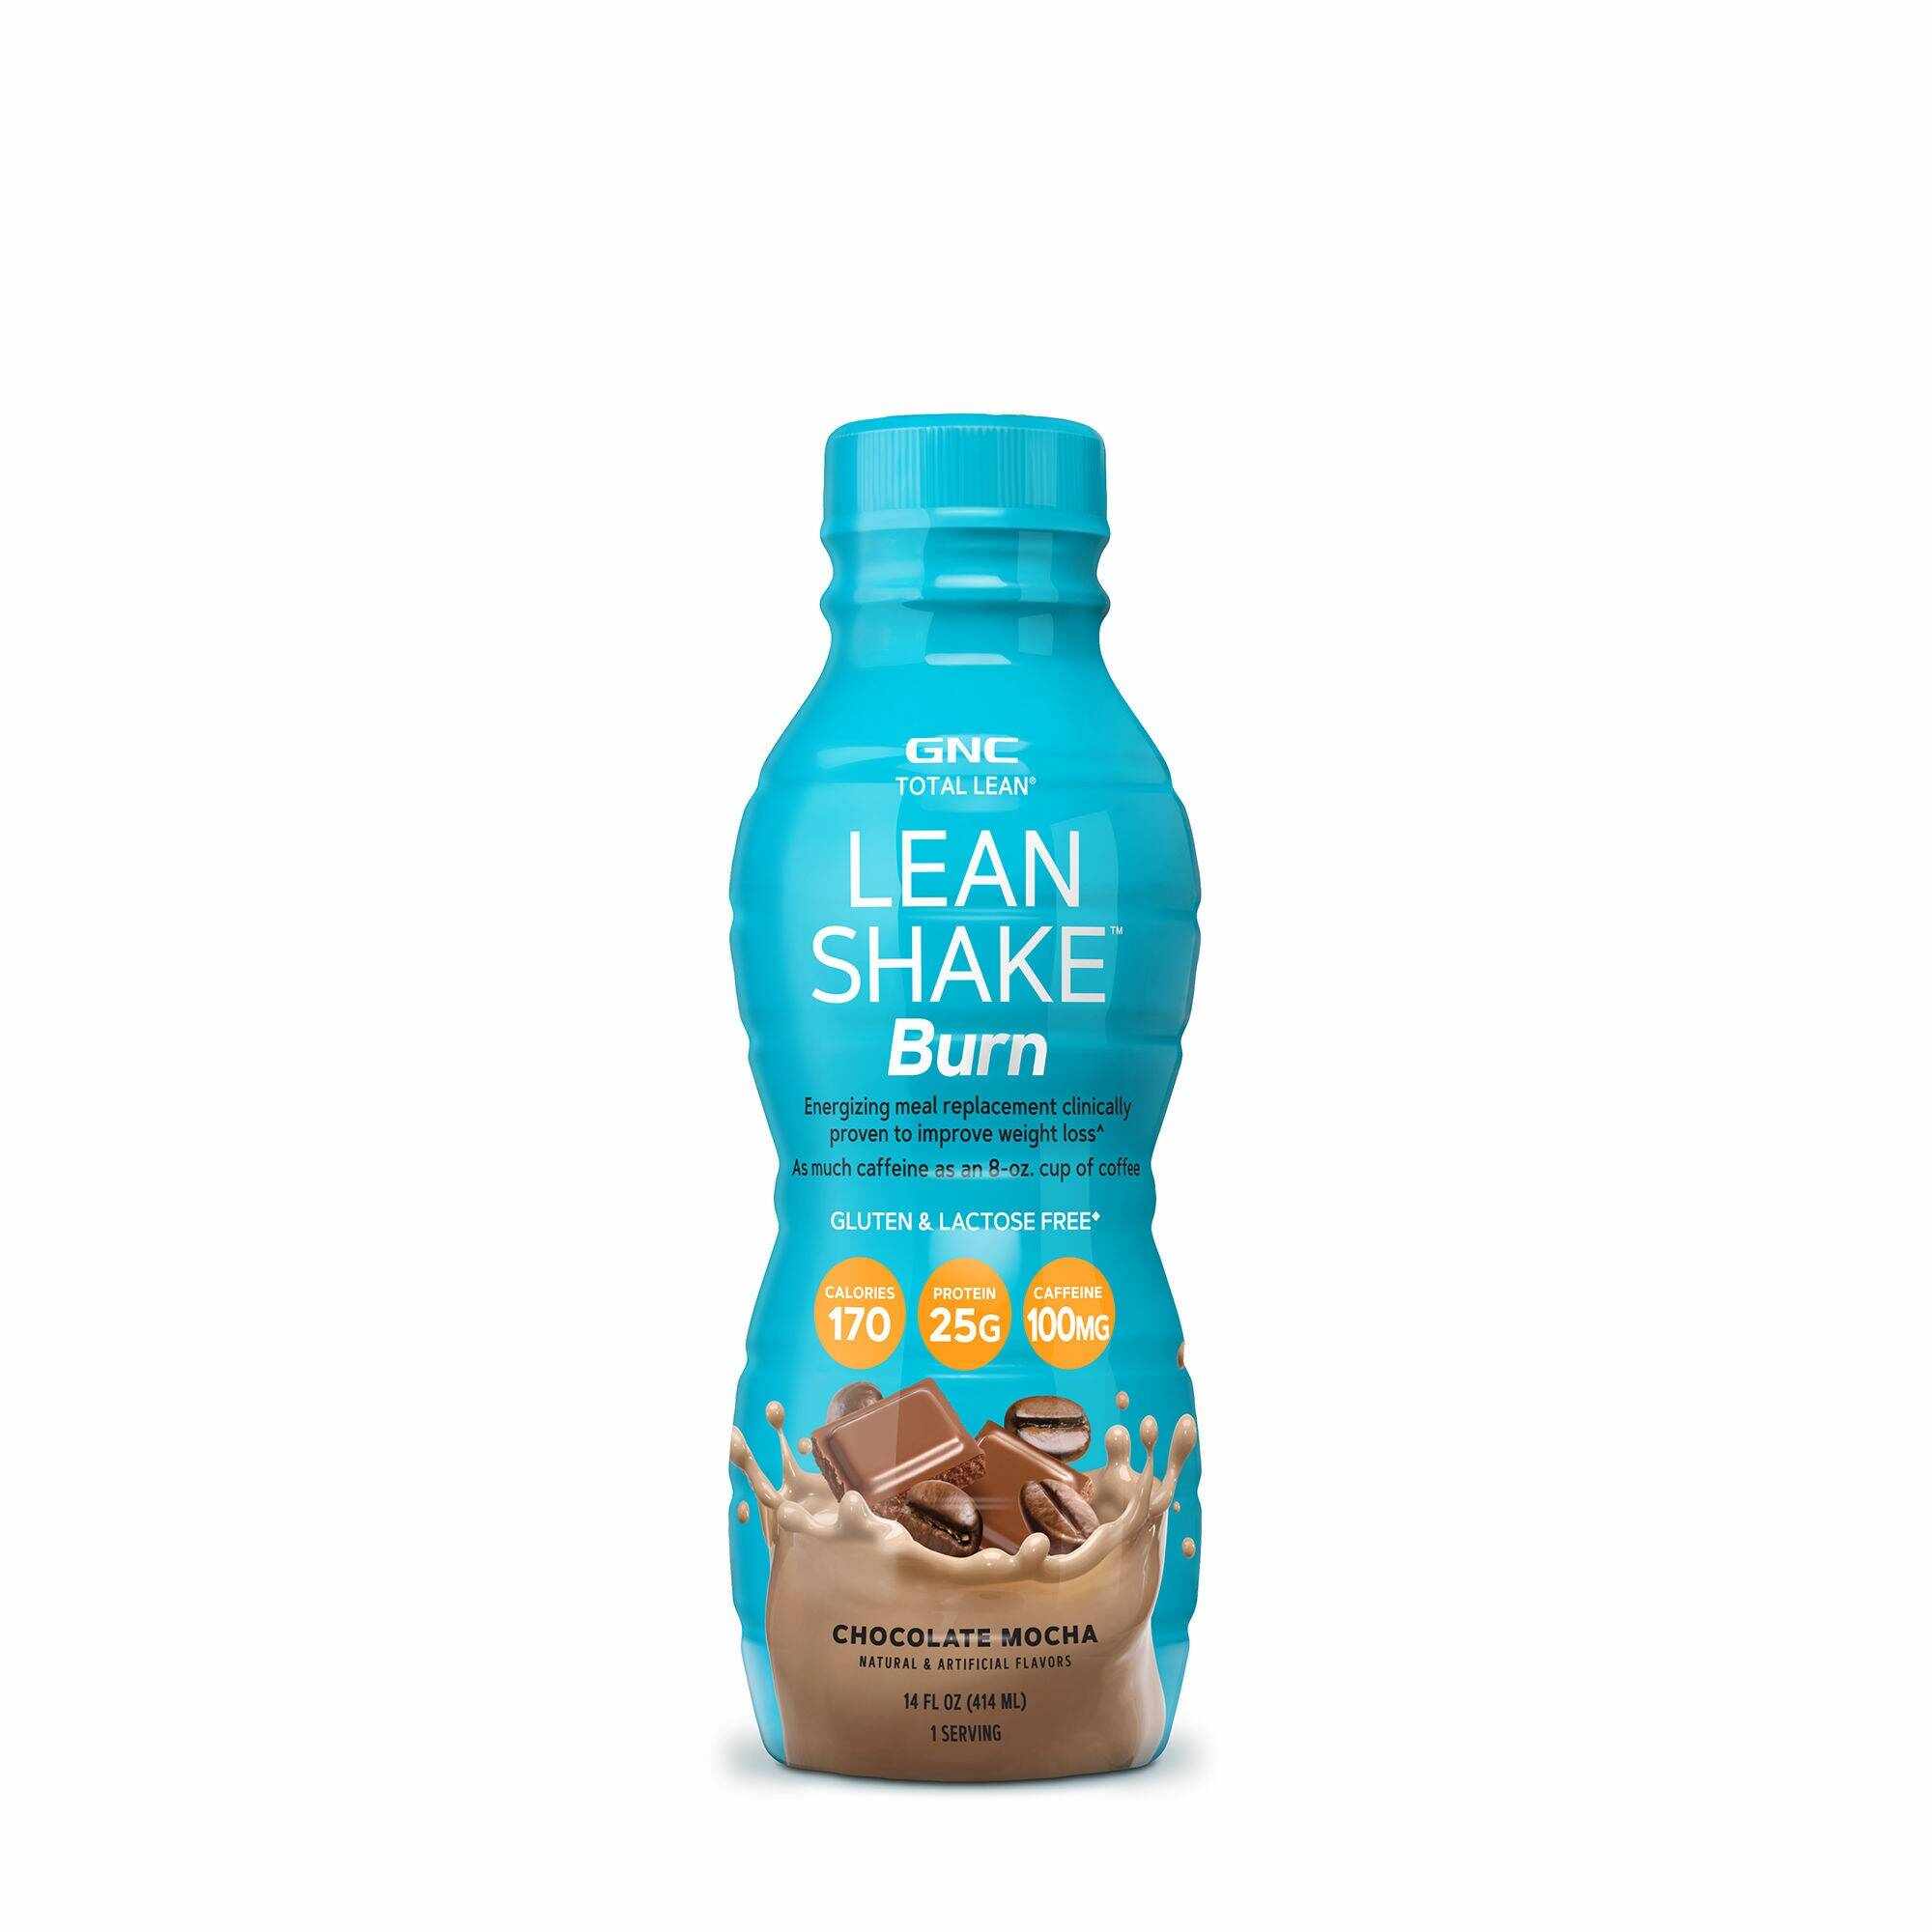 Total lean lean shake burn, shake proteic rtd cu aroma de ciocolata si cafea, 414ml - Gnc